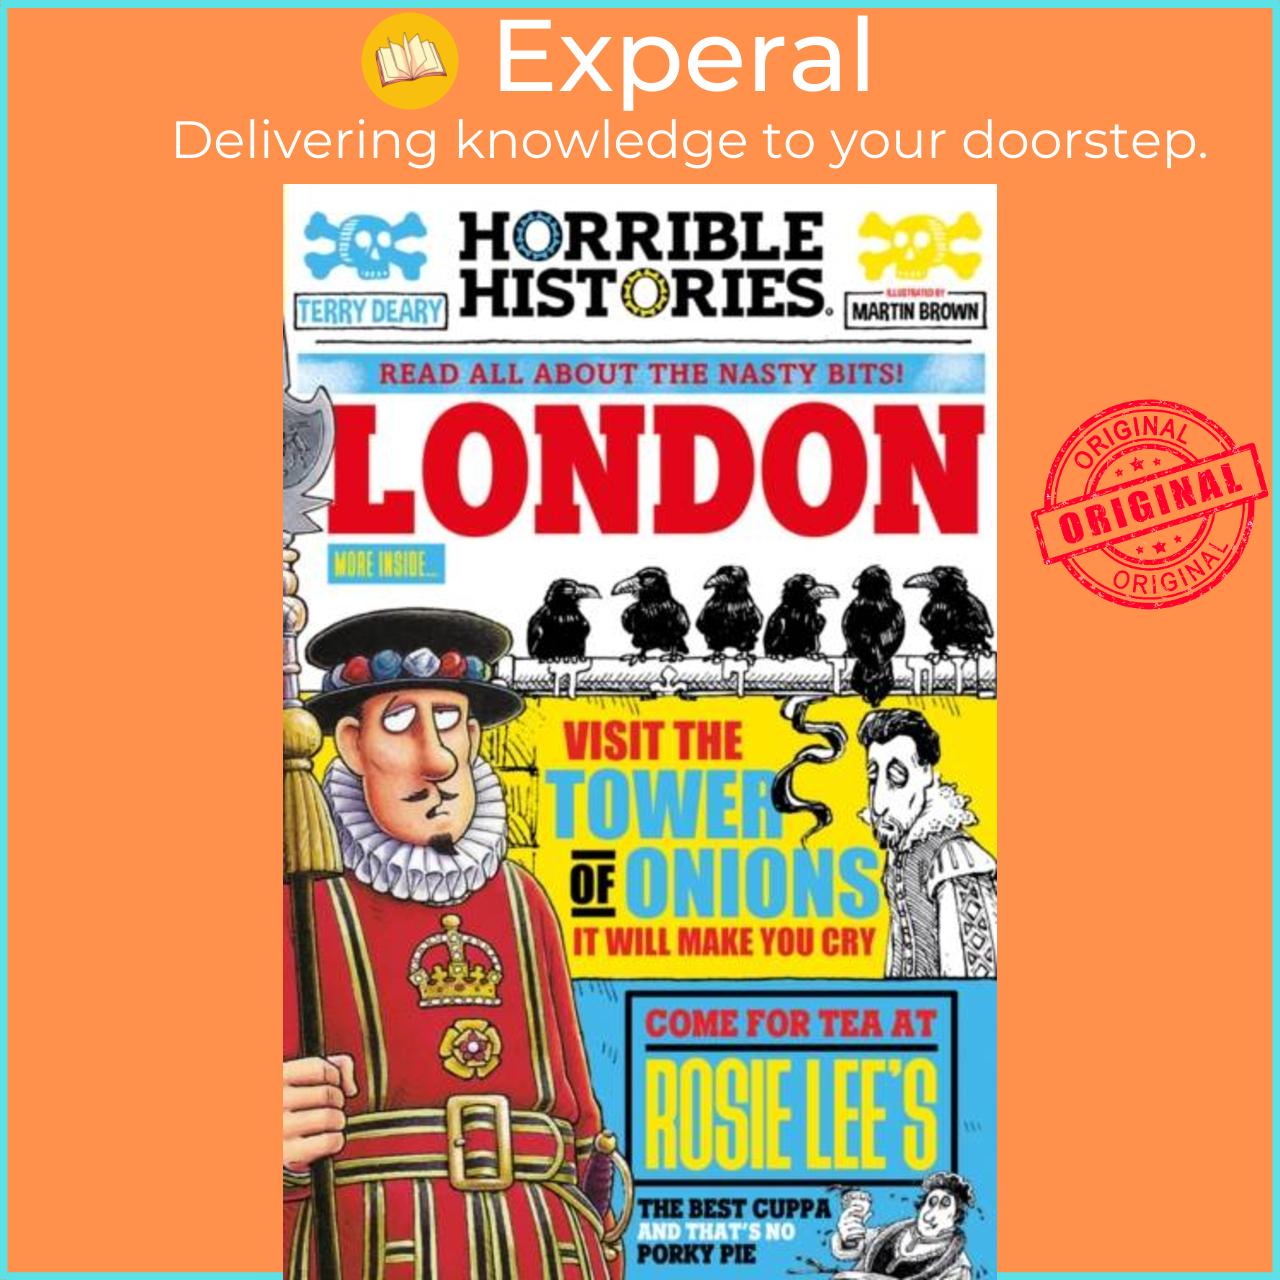 Hình ảnh Sách - Gruesome Guides: London (newspaper edition) by Martin Brown (UK edition, paperback)